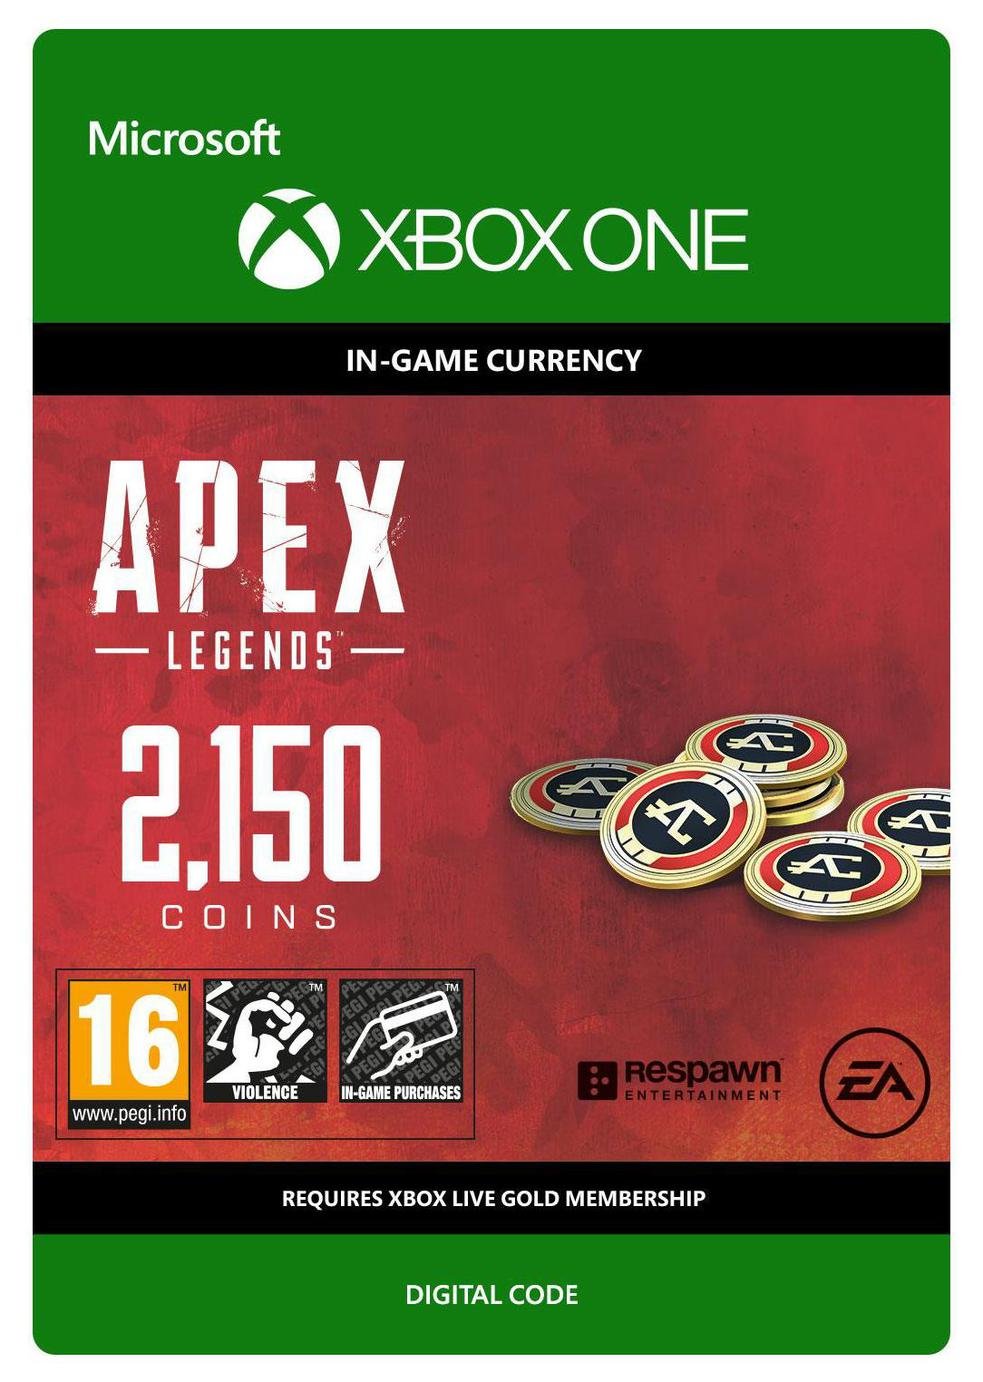 Apex Legends 2150 Coins Xbox One Receipt Code